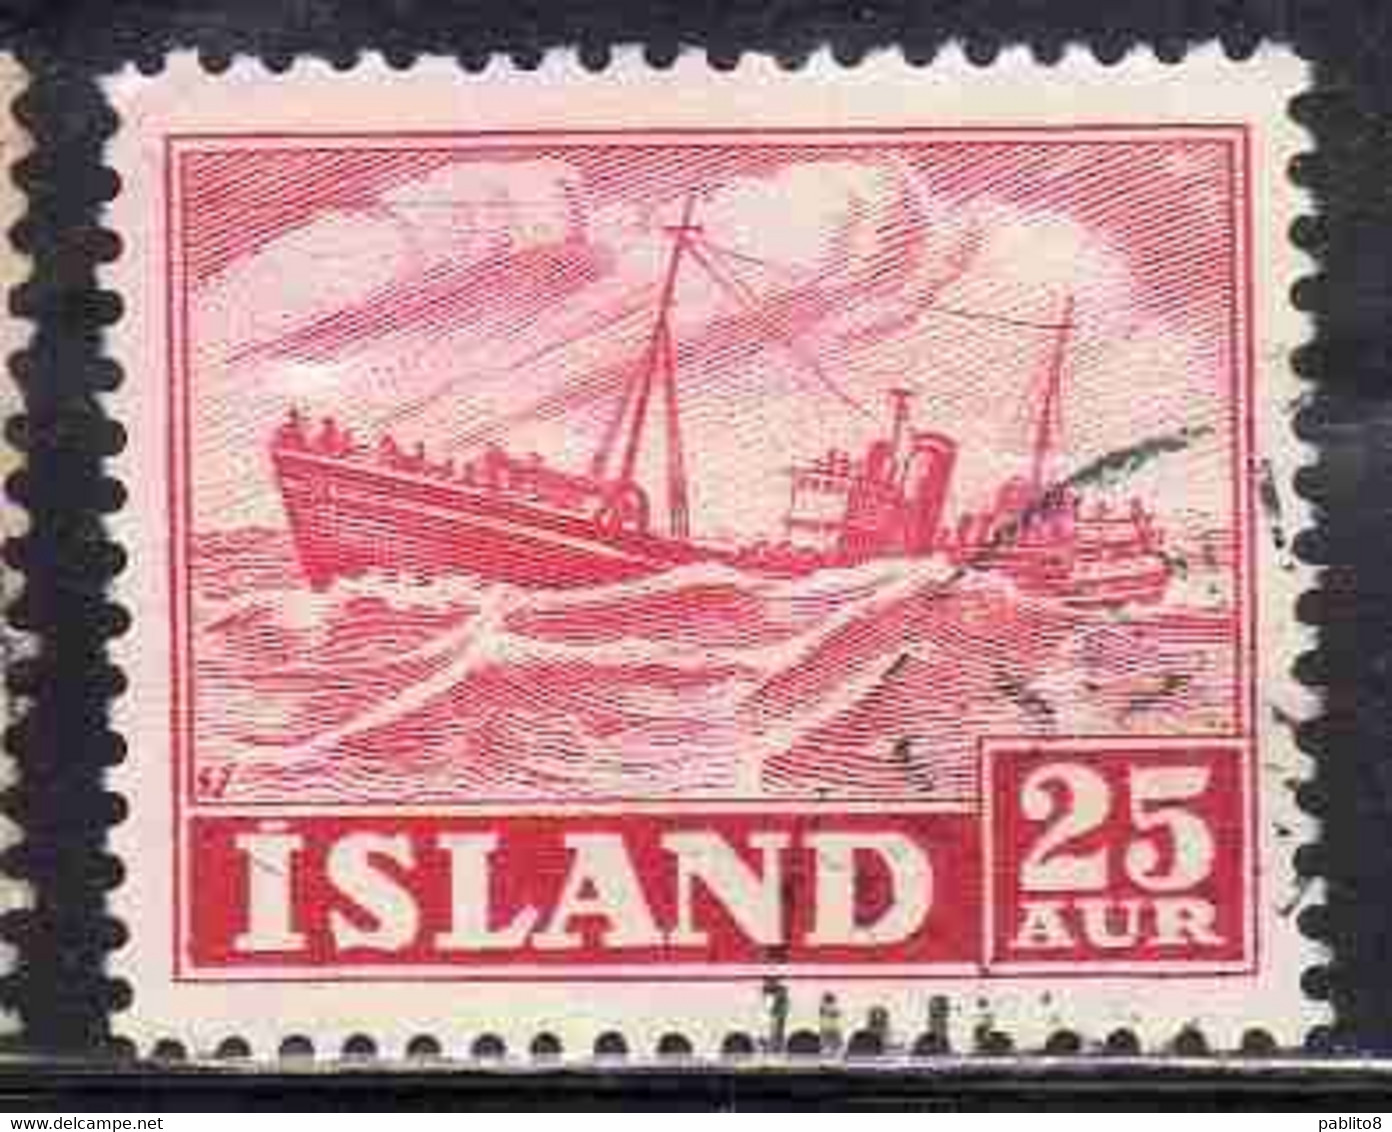 ISLANDA ICELAND ISLANDE 1950 1954 TRAWLER 25a USED USATO OBLITERE' - Oblitérés